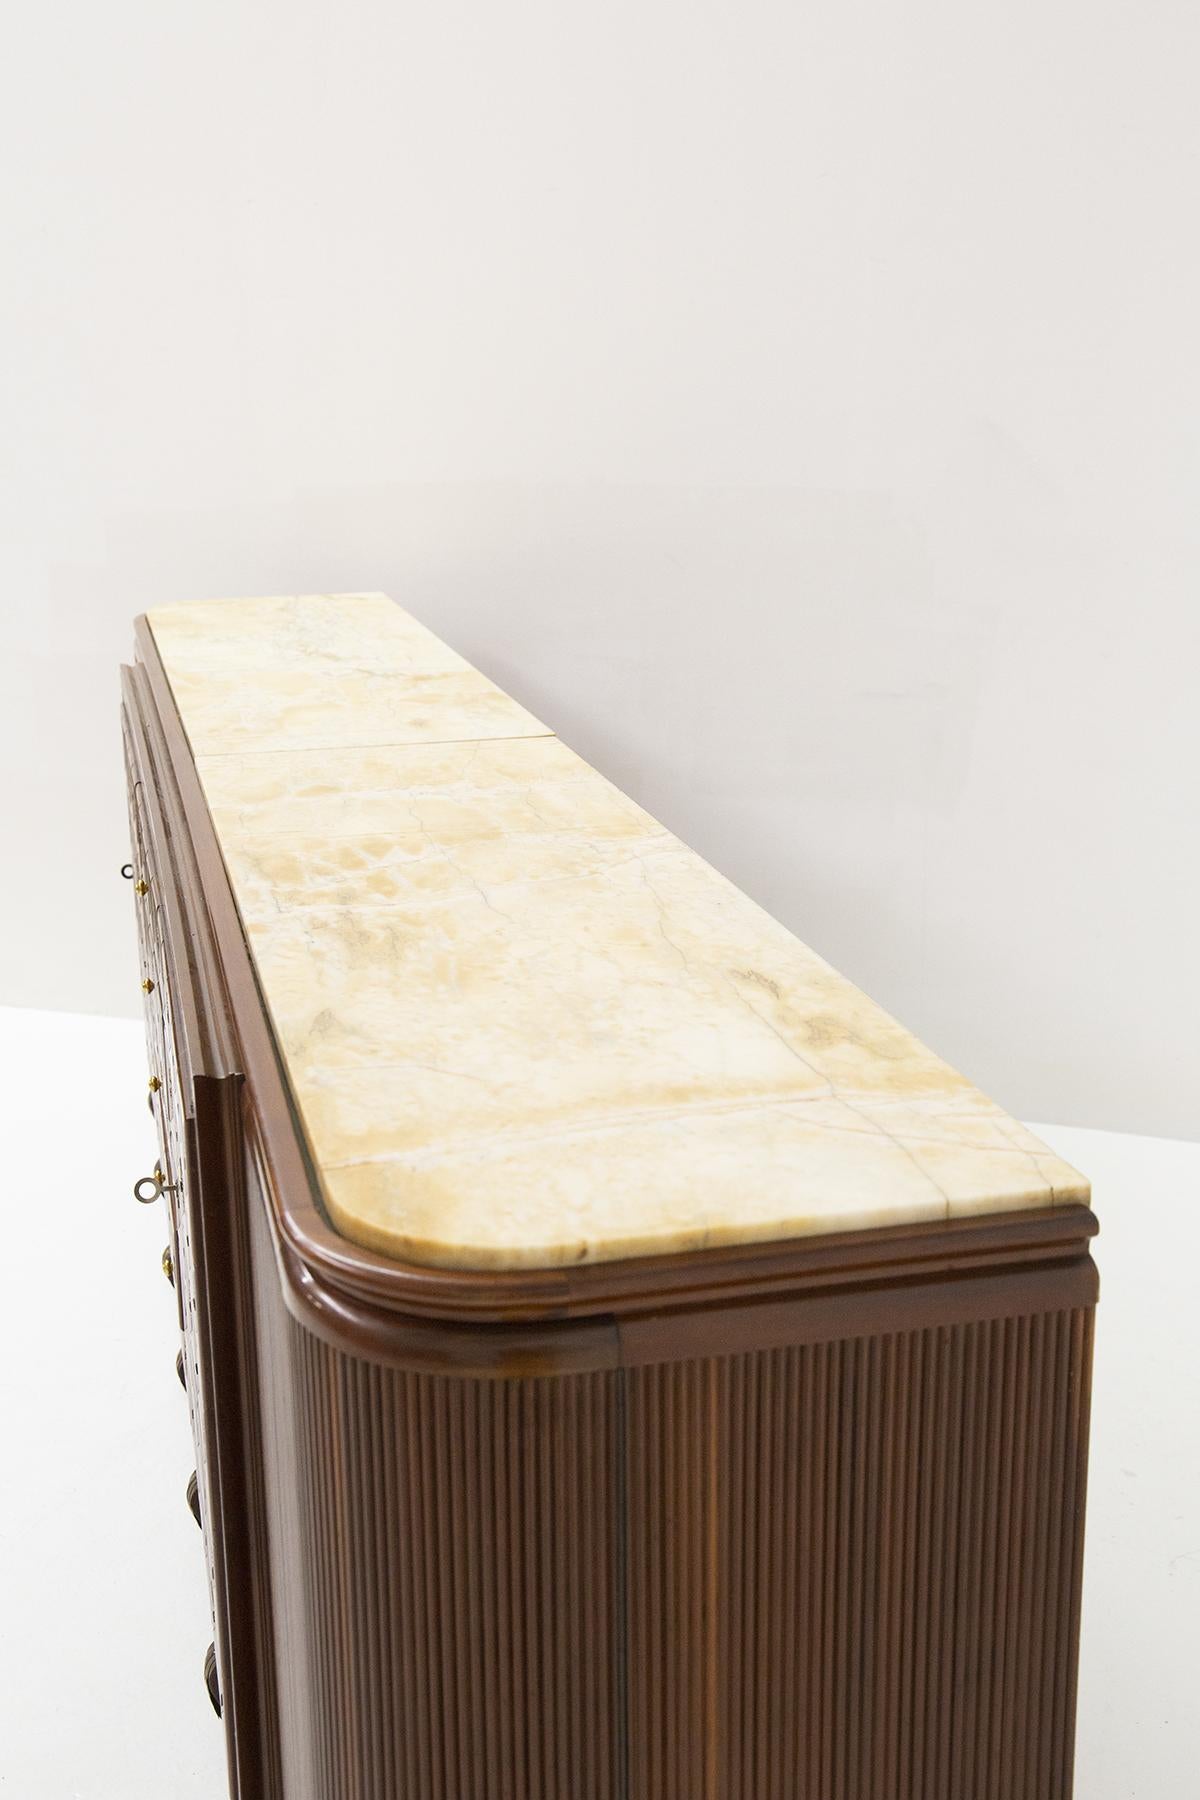 Gino Rancati Rare Wood and Marble Sideboard, Published 11